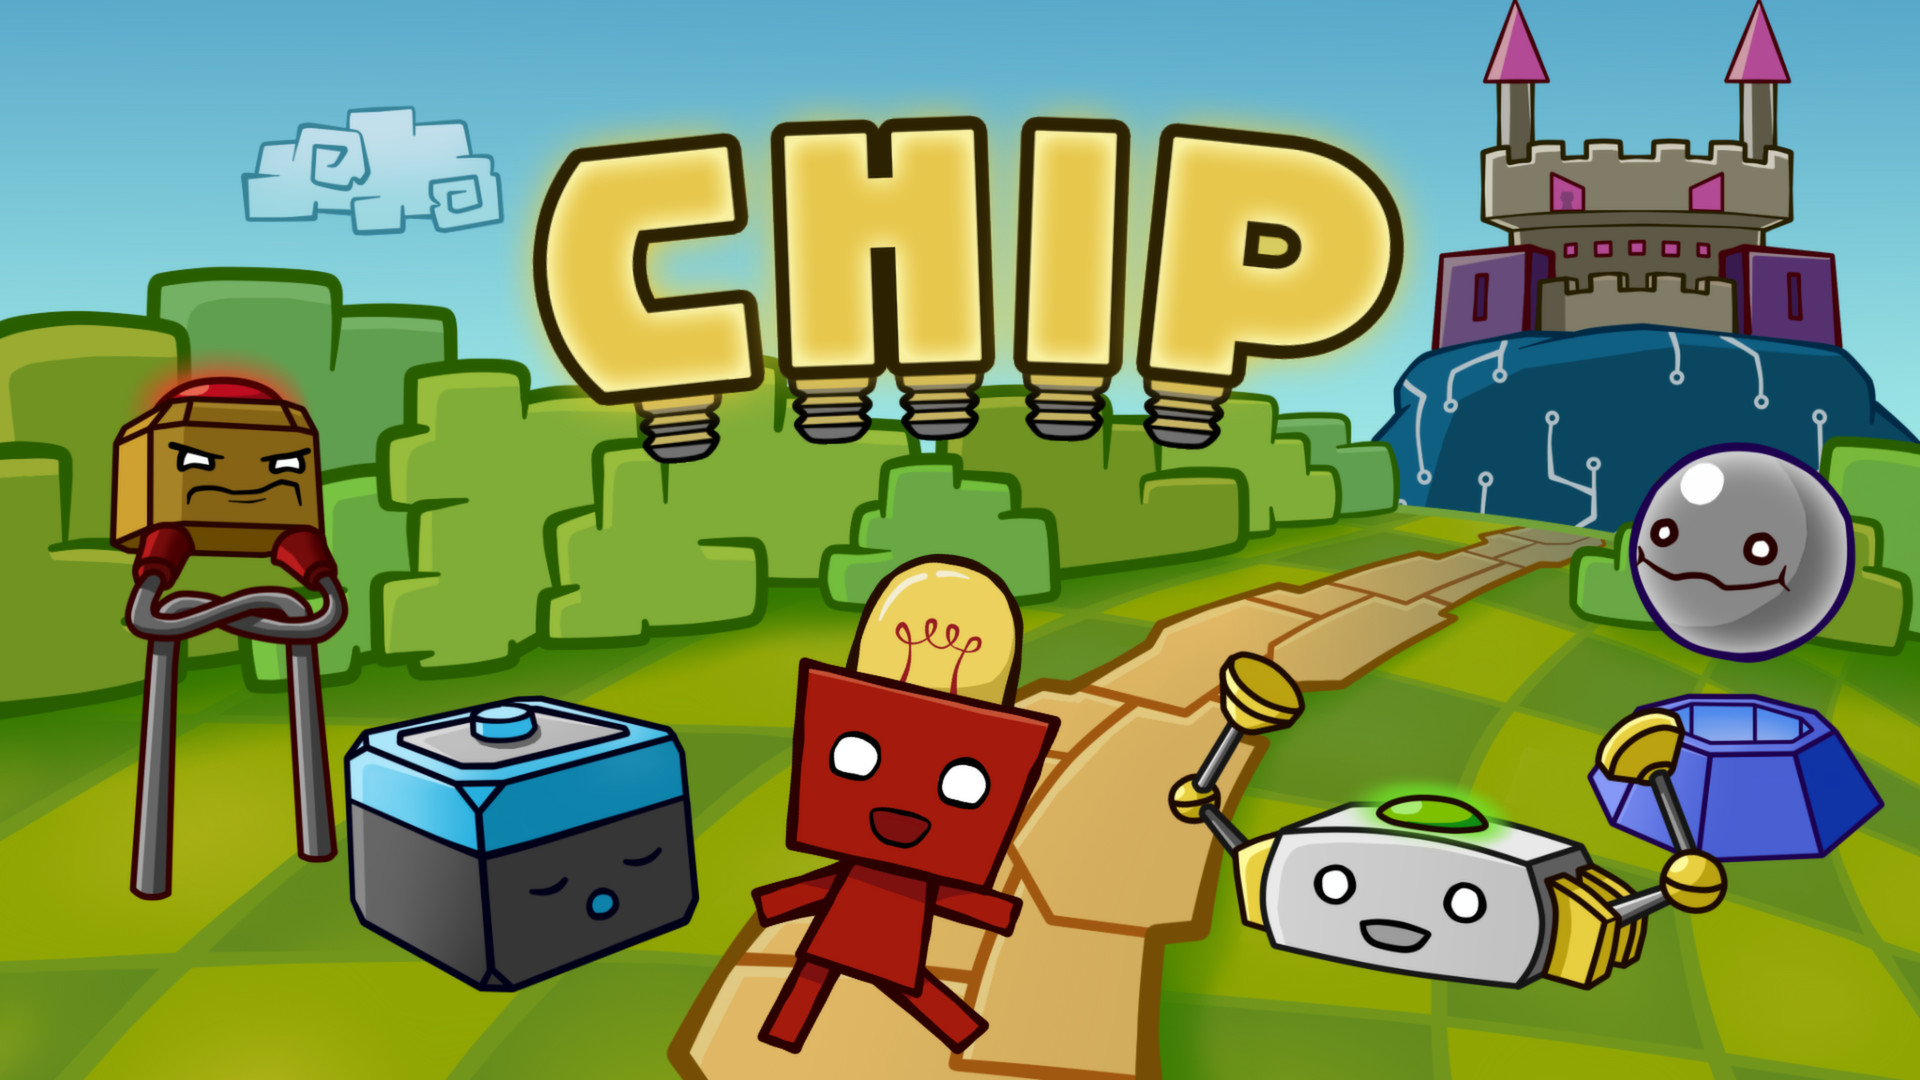 Chip screenshot